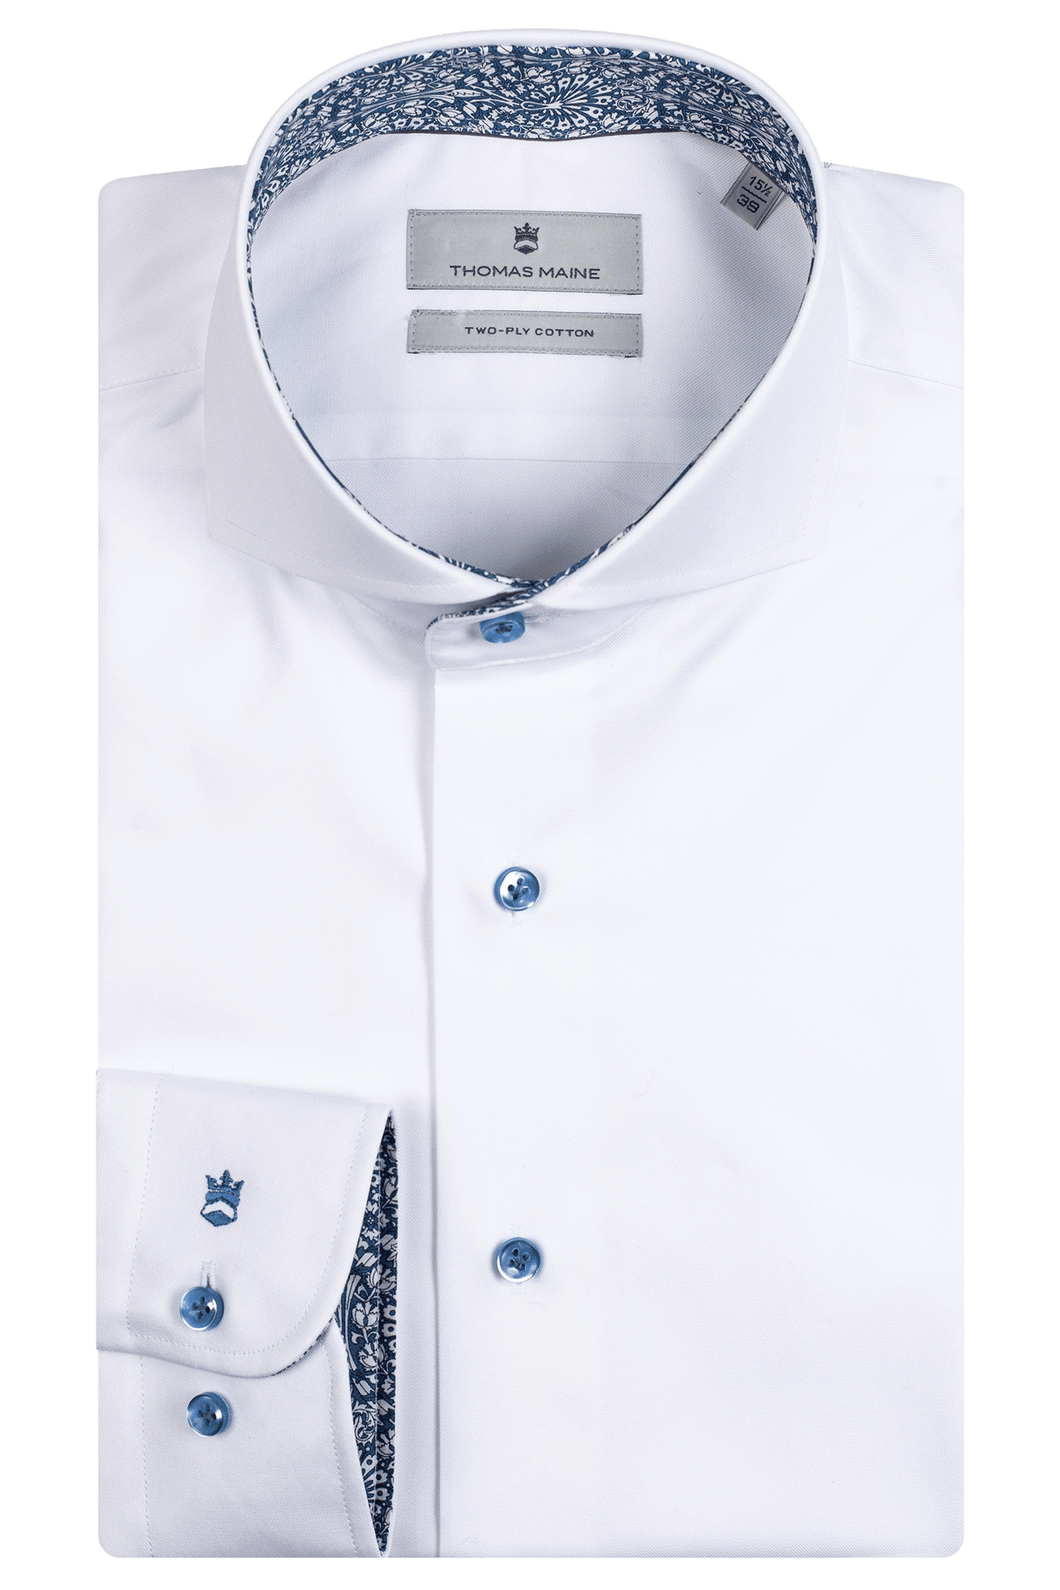 THOMAS MAINE White Shirt with Tile Print Trim 327725A